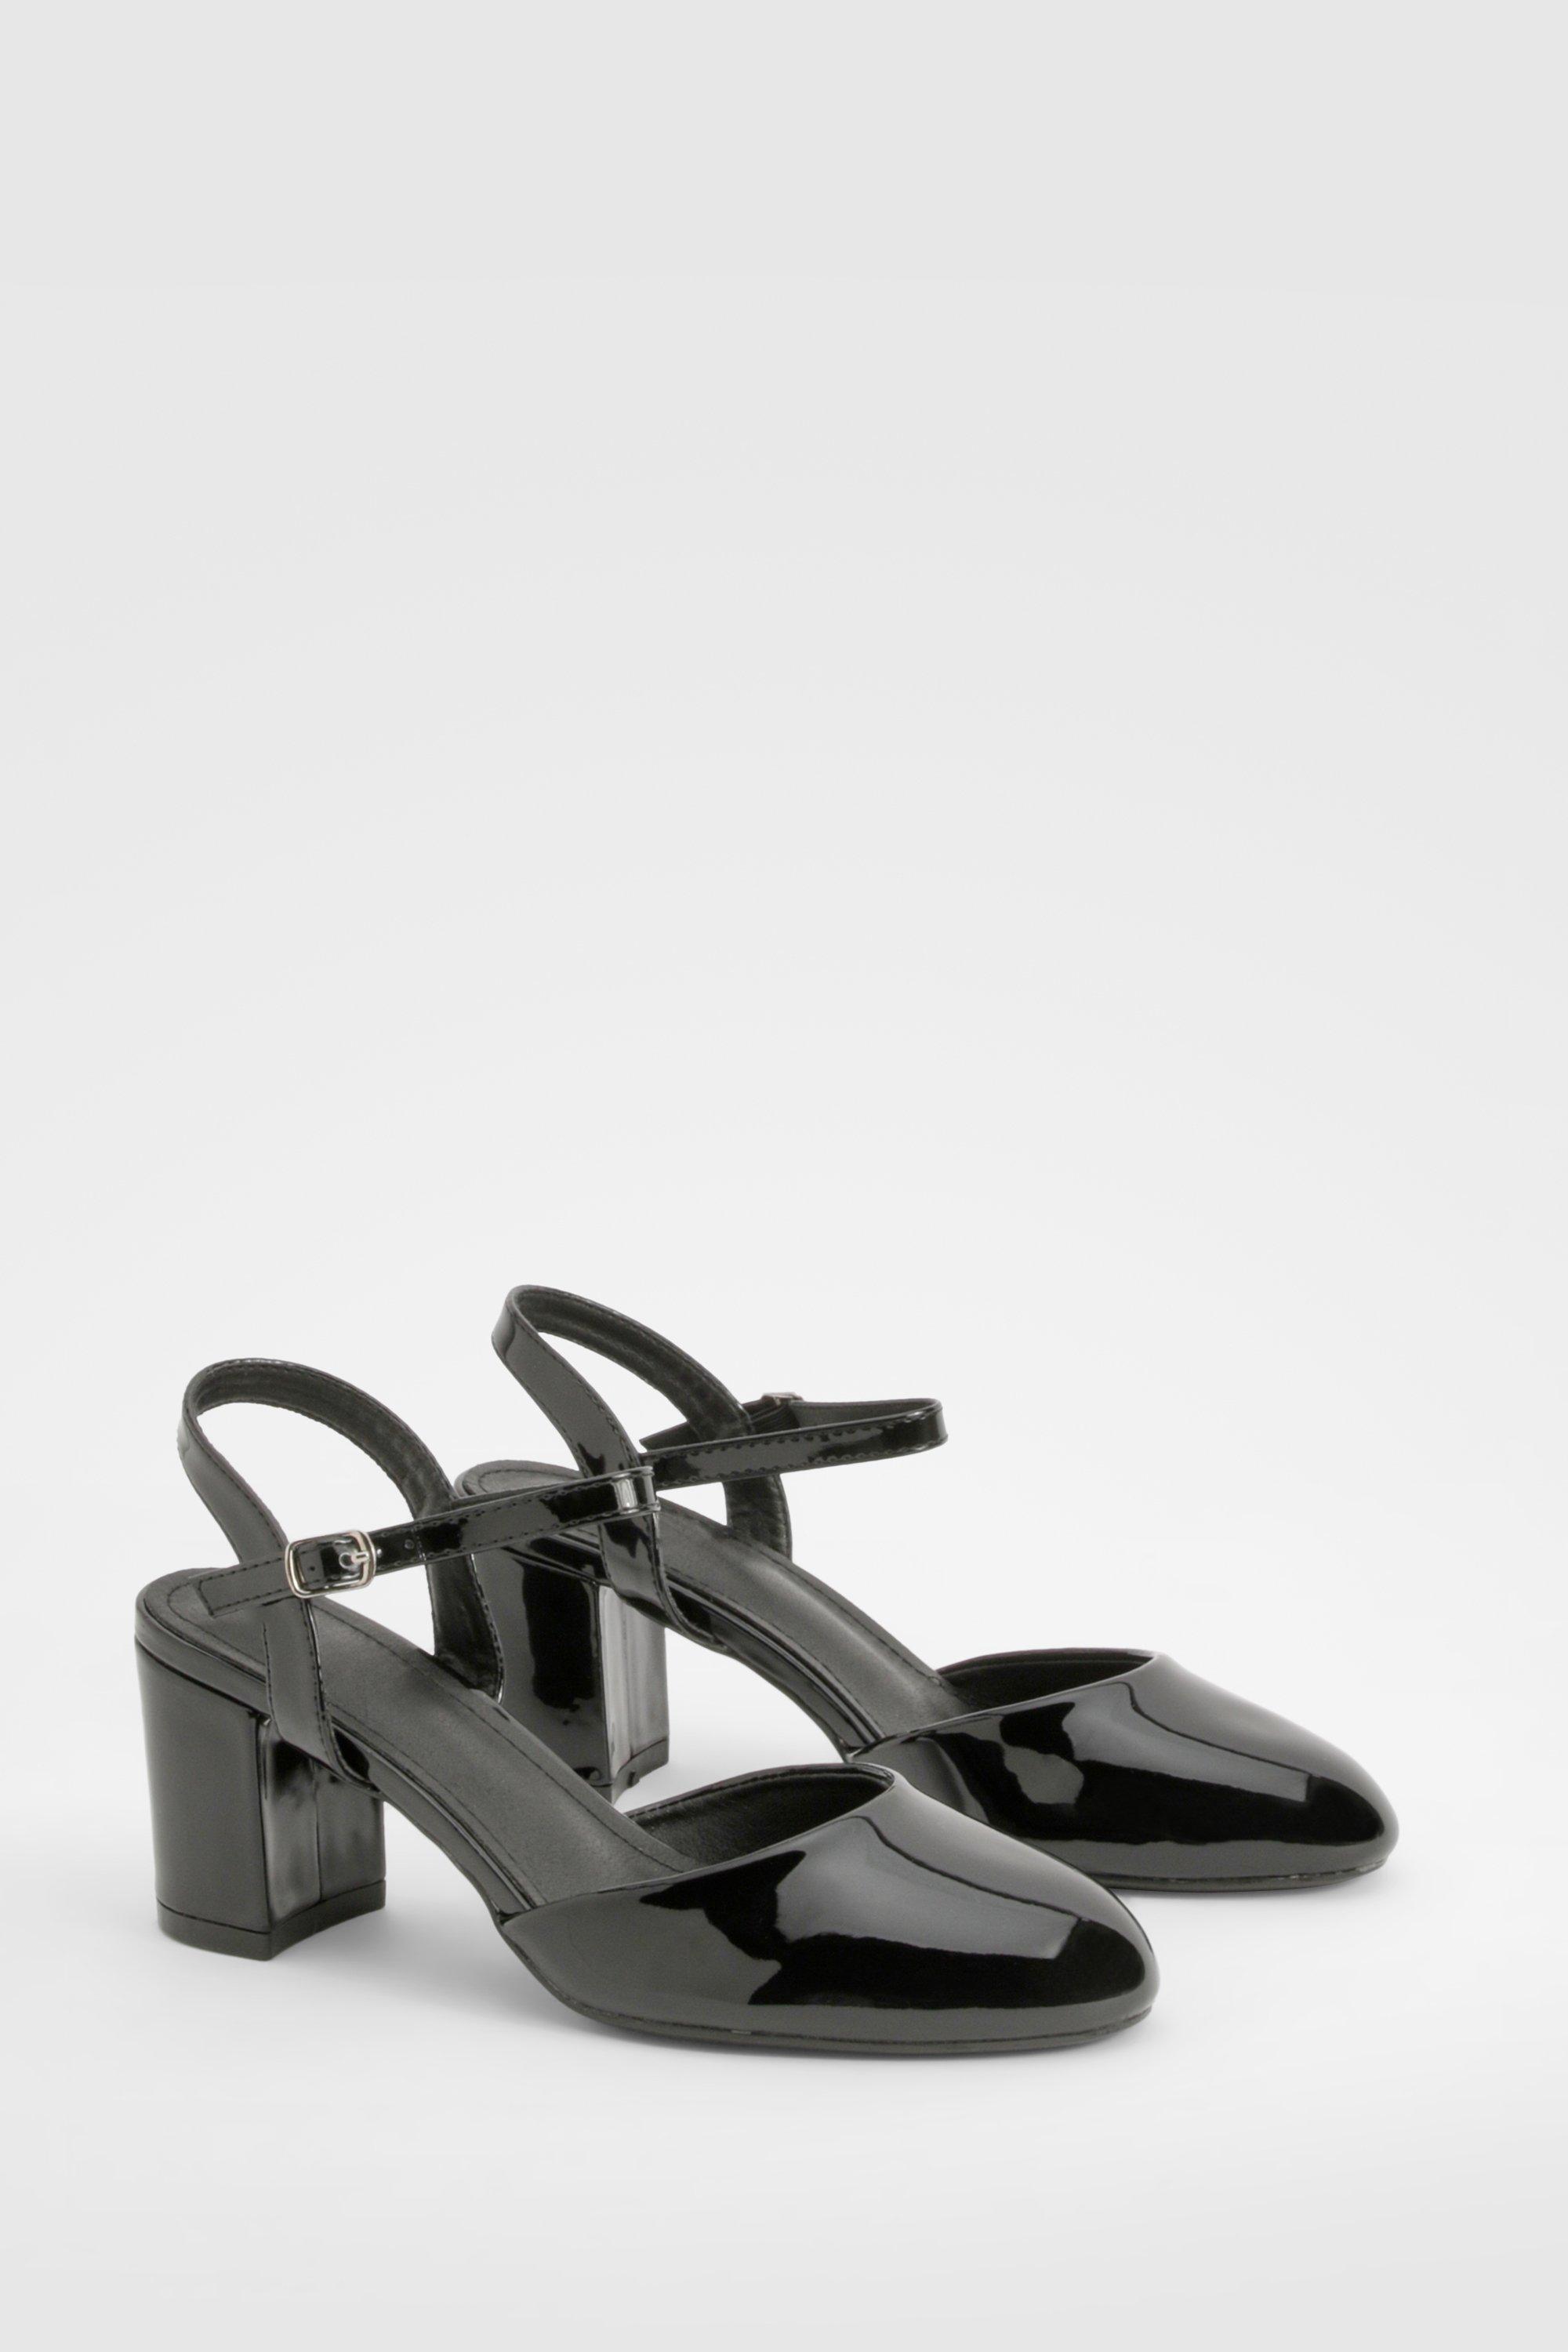 Image of Patent Block Heel Court Shoes, Nero